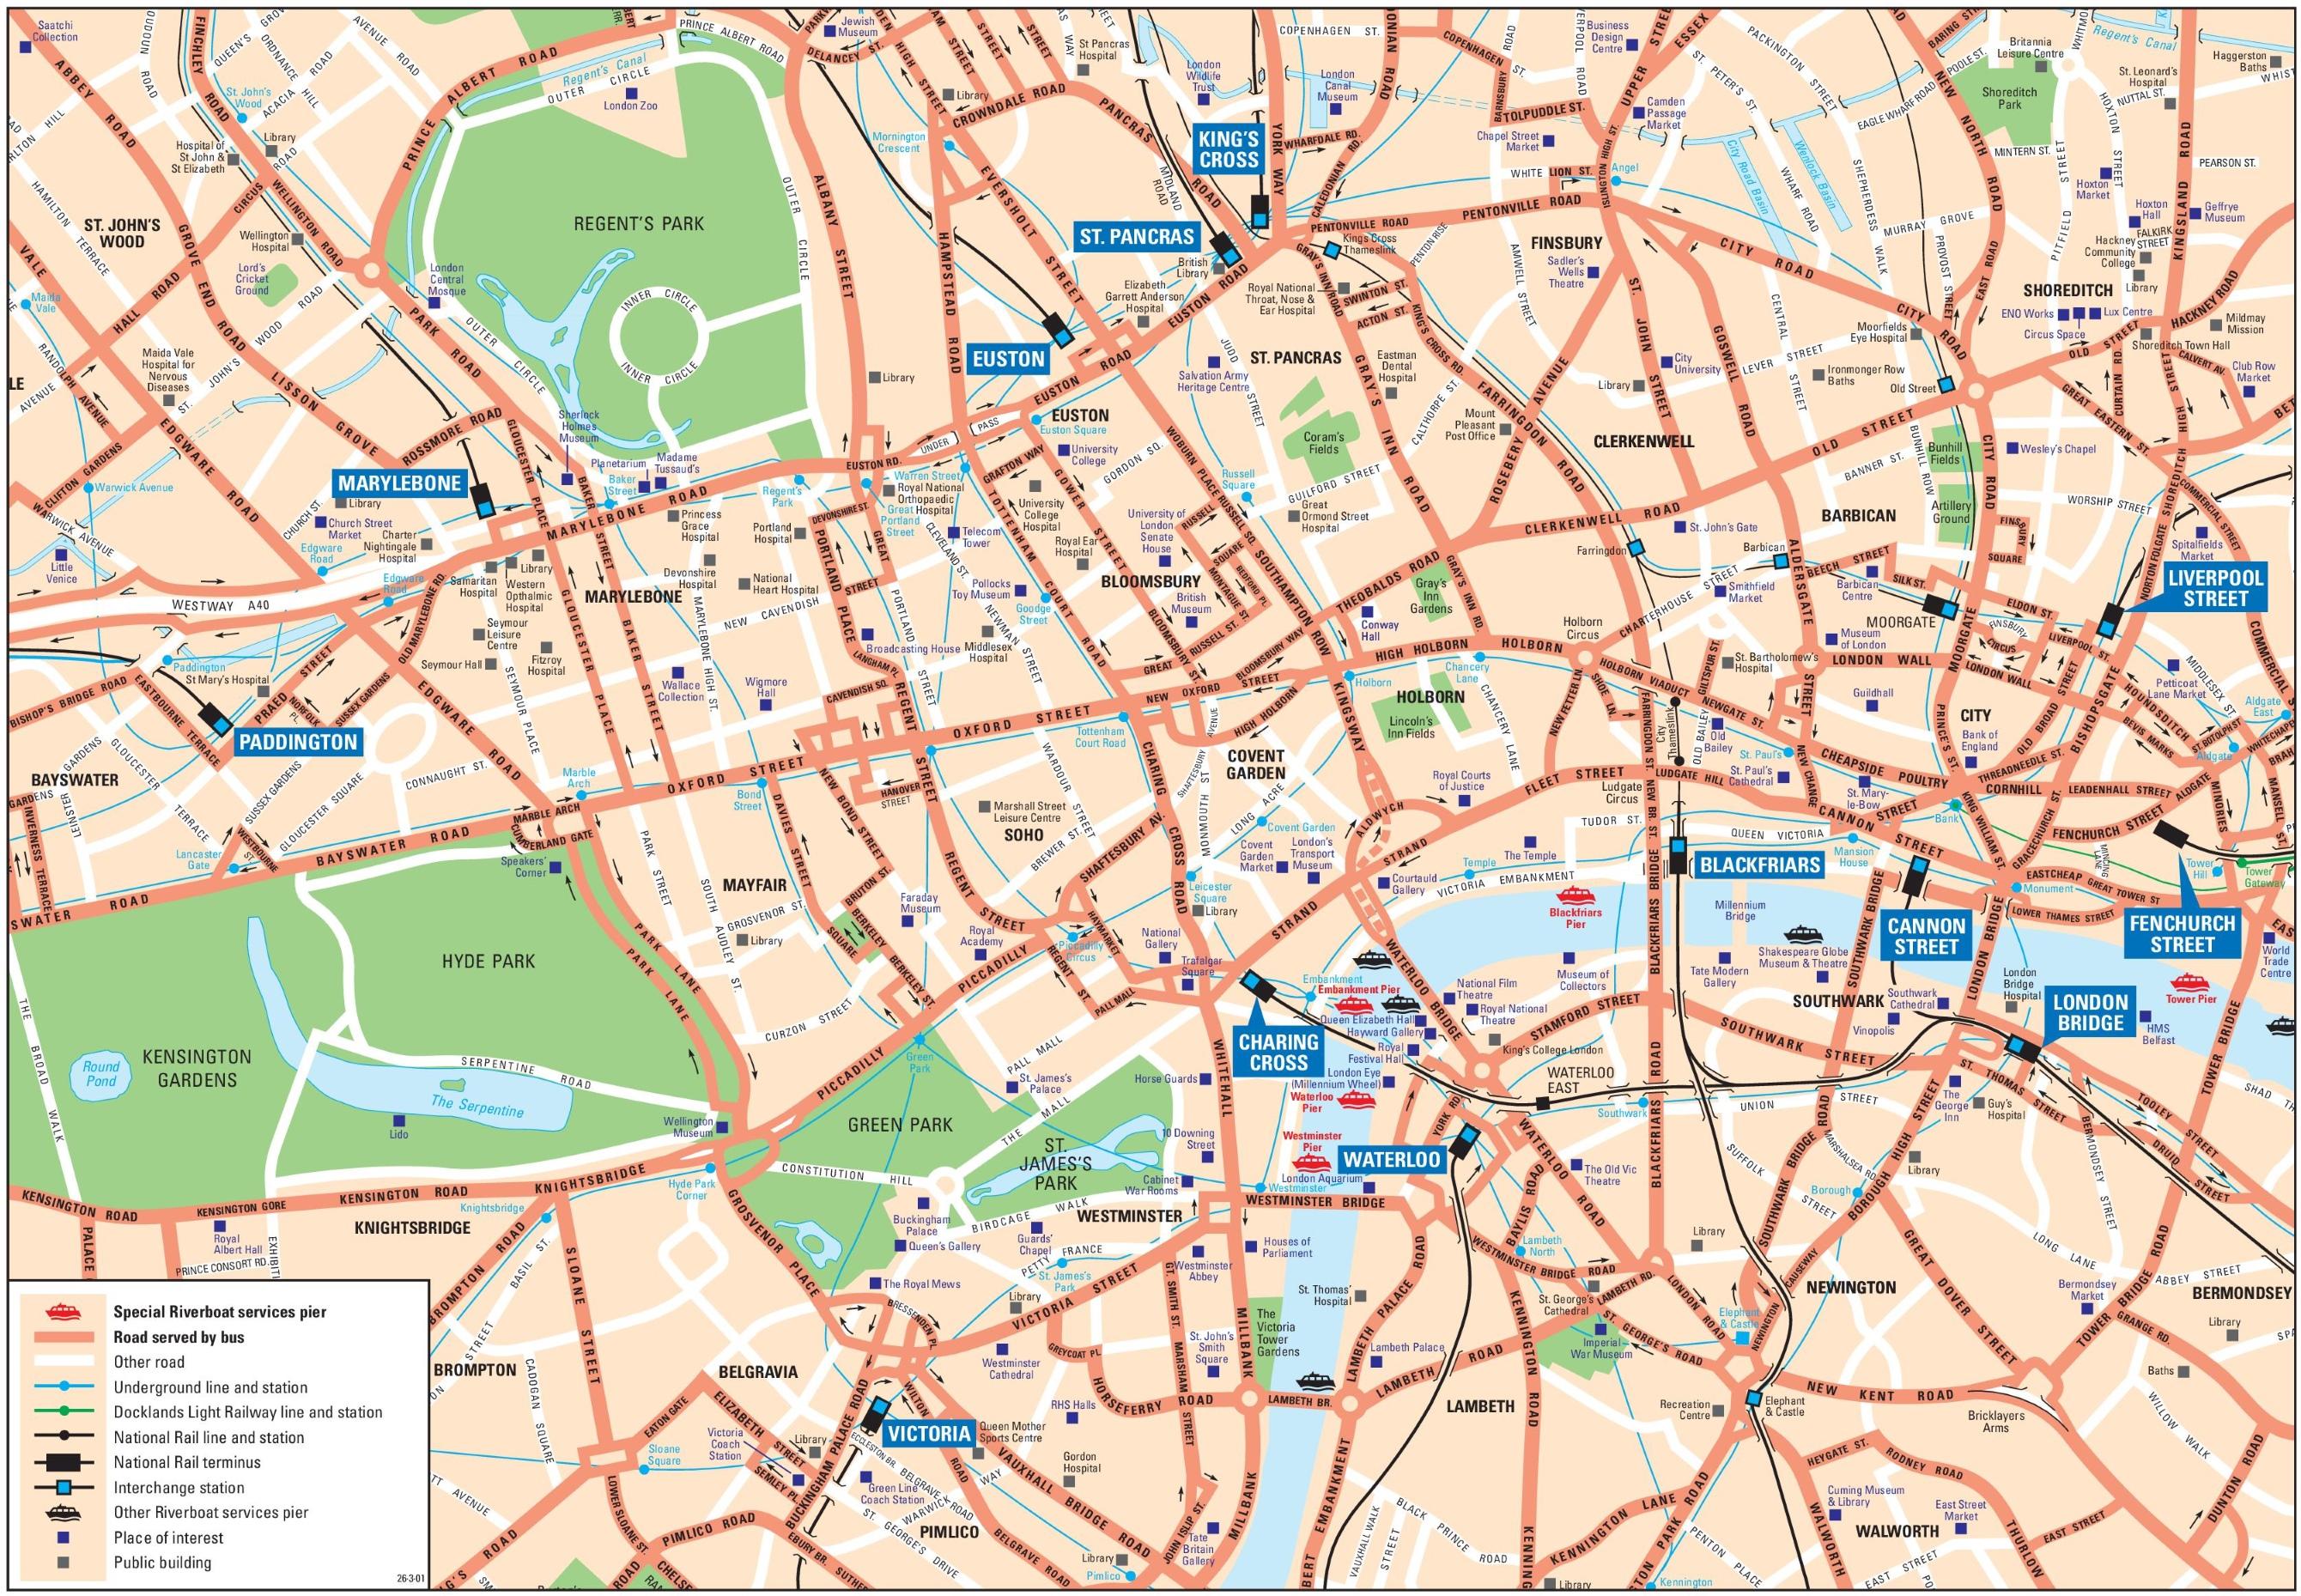 London City karta - London city karta (England)